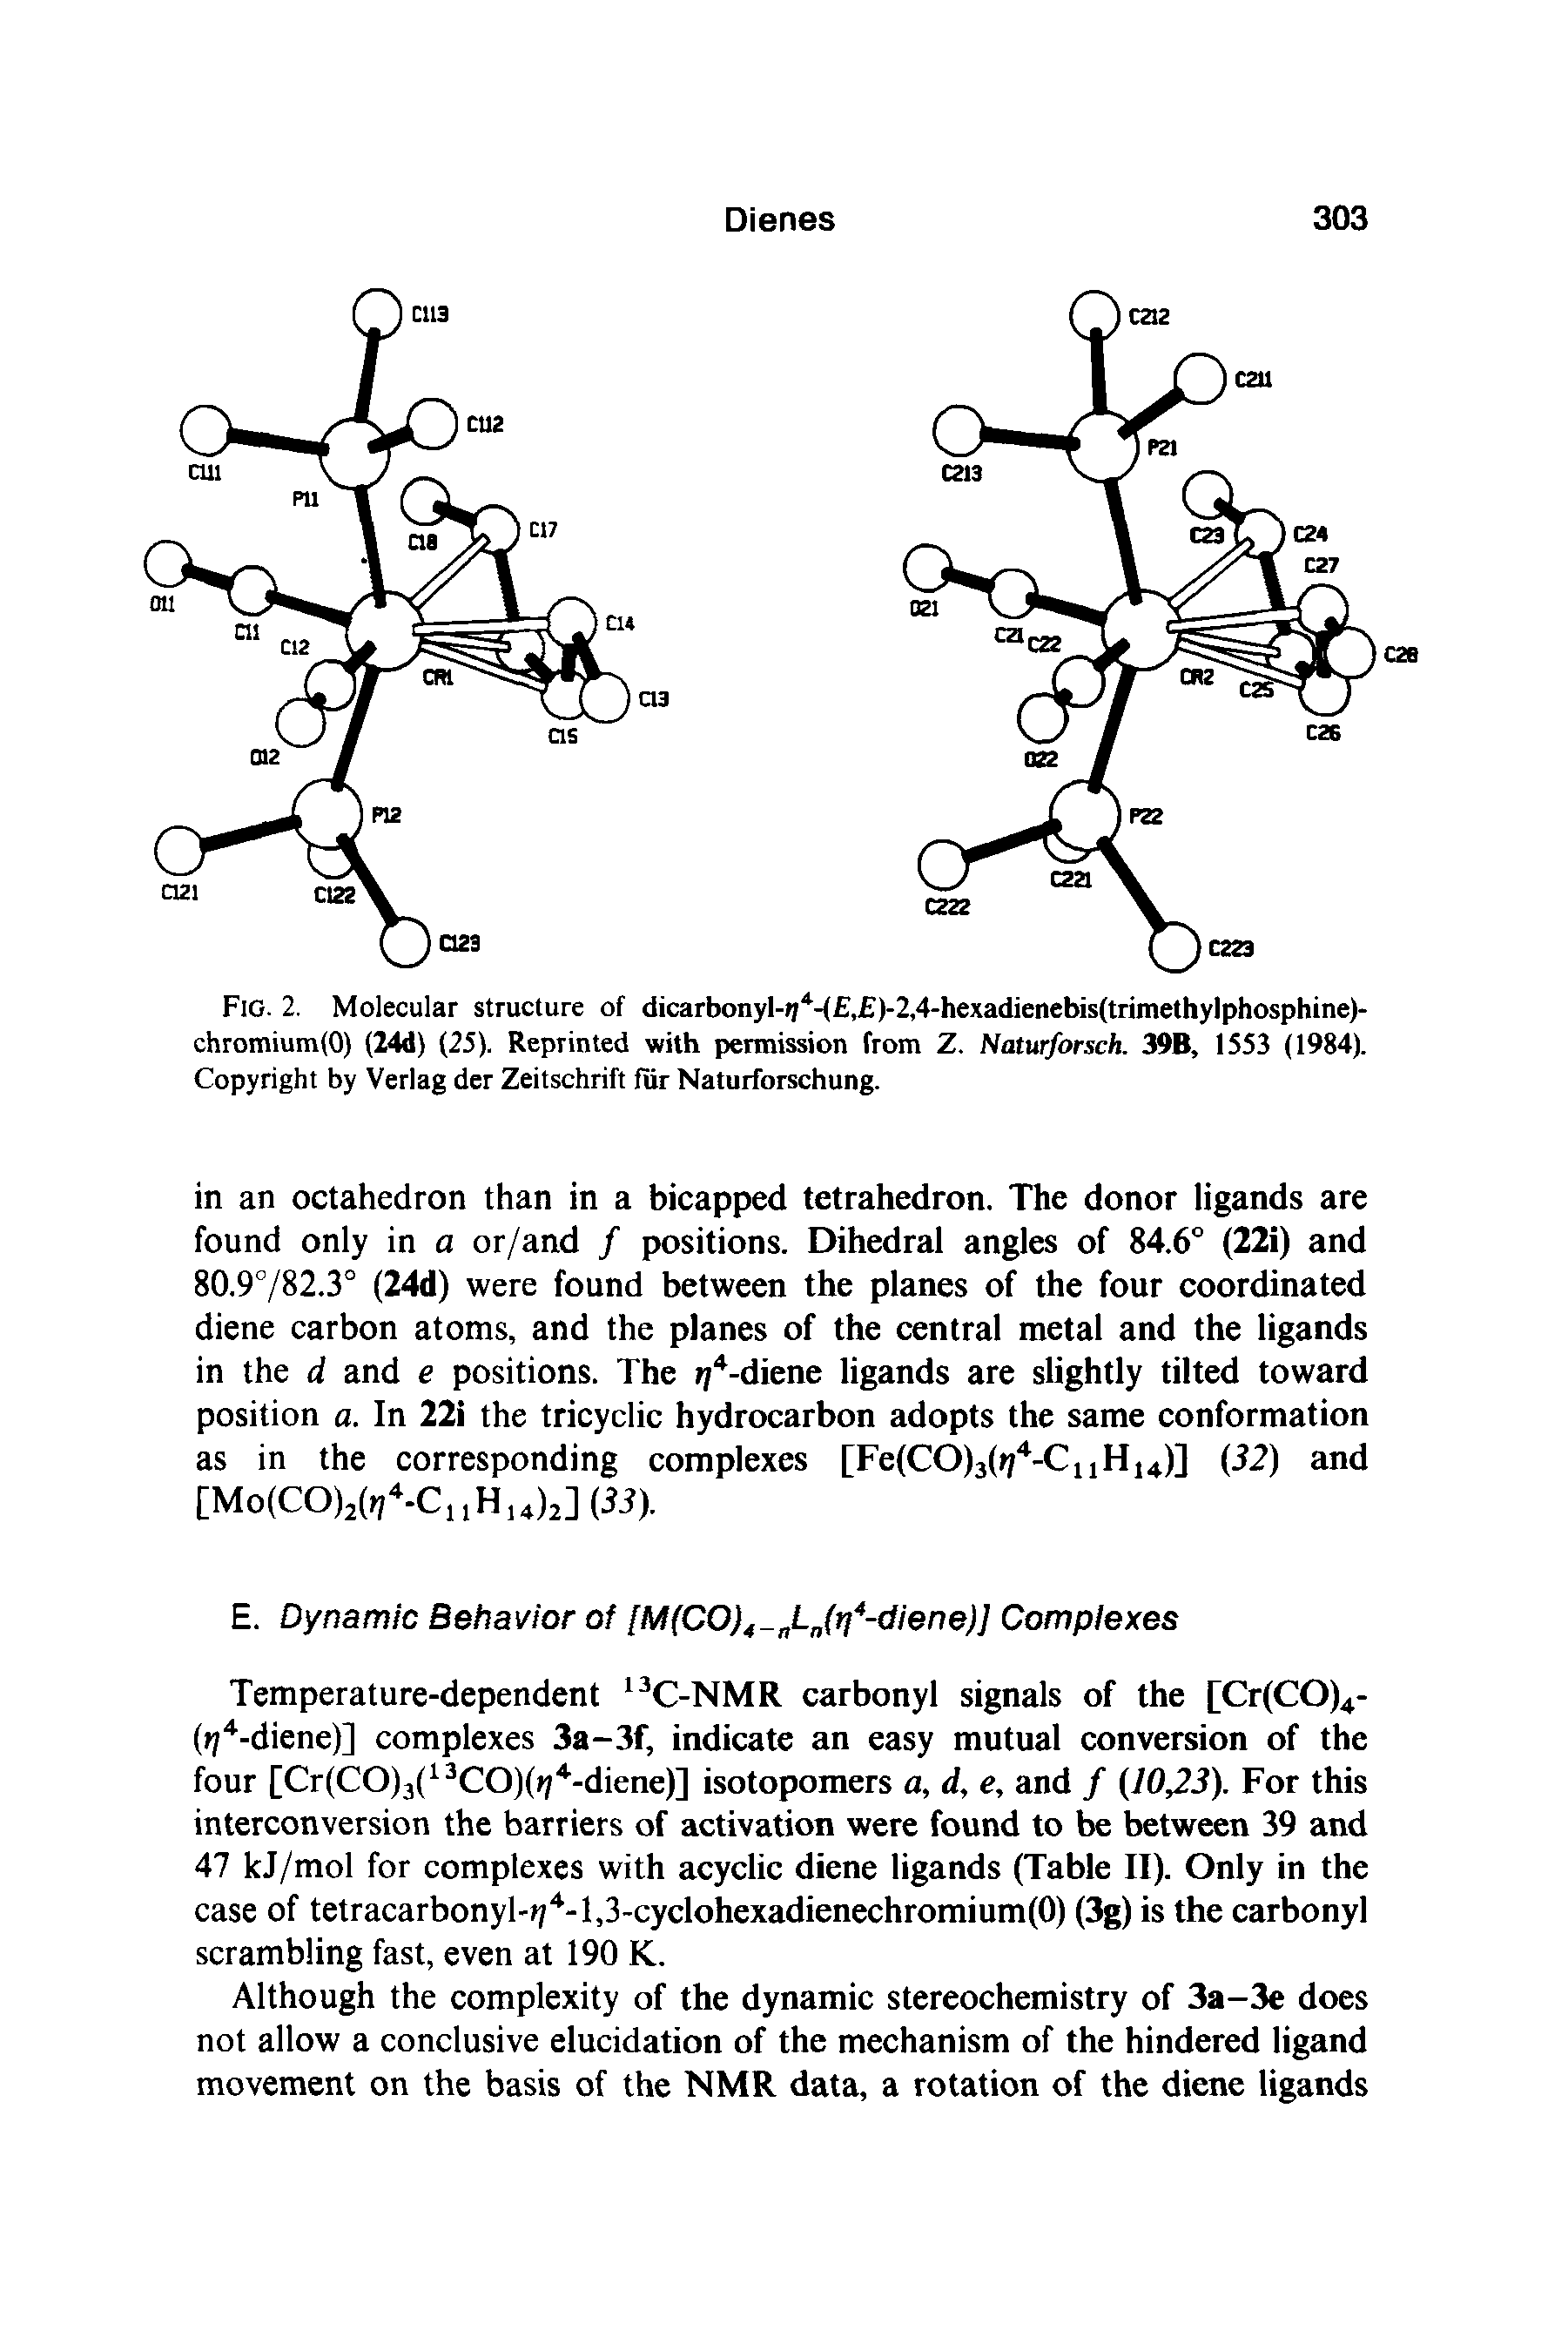 Fig. 2. Molecular structure of dicarbonyl- j4-( , )-2,4-hexadienebis(trimethylphosphine)-chromium(O) (24d) (25). Reprinted with permission from Z. Naturforsch. 39B, 1553 (1984). Copyright by Verlag der Zeitschrift fur Naturforschung.